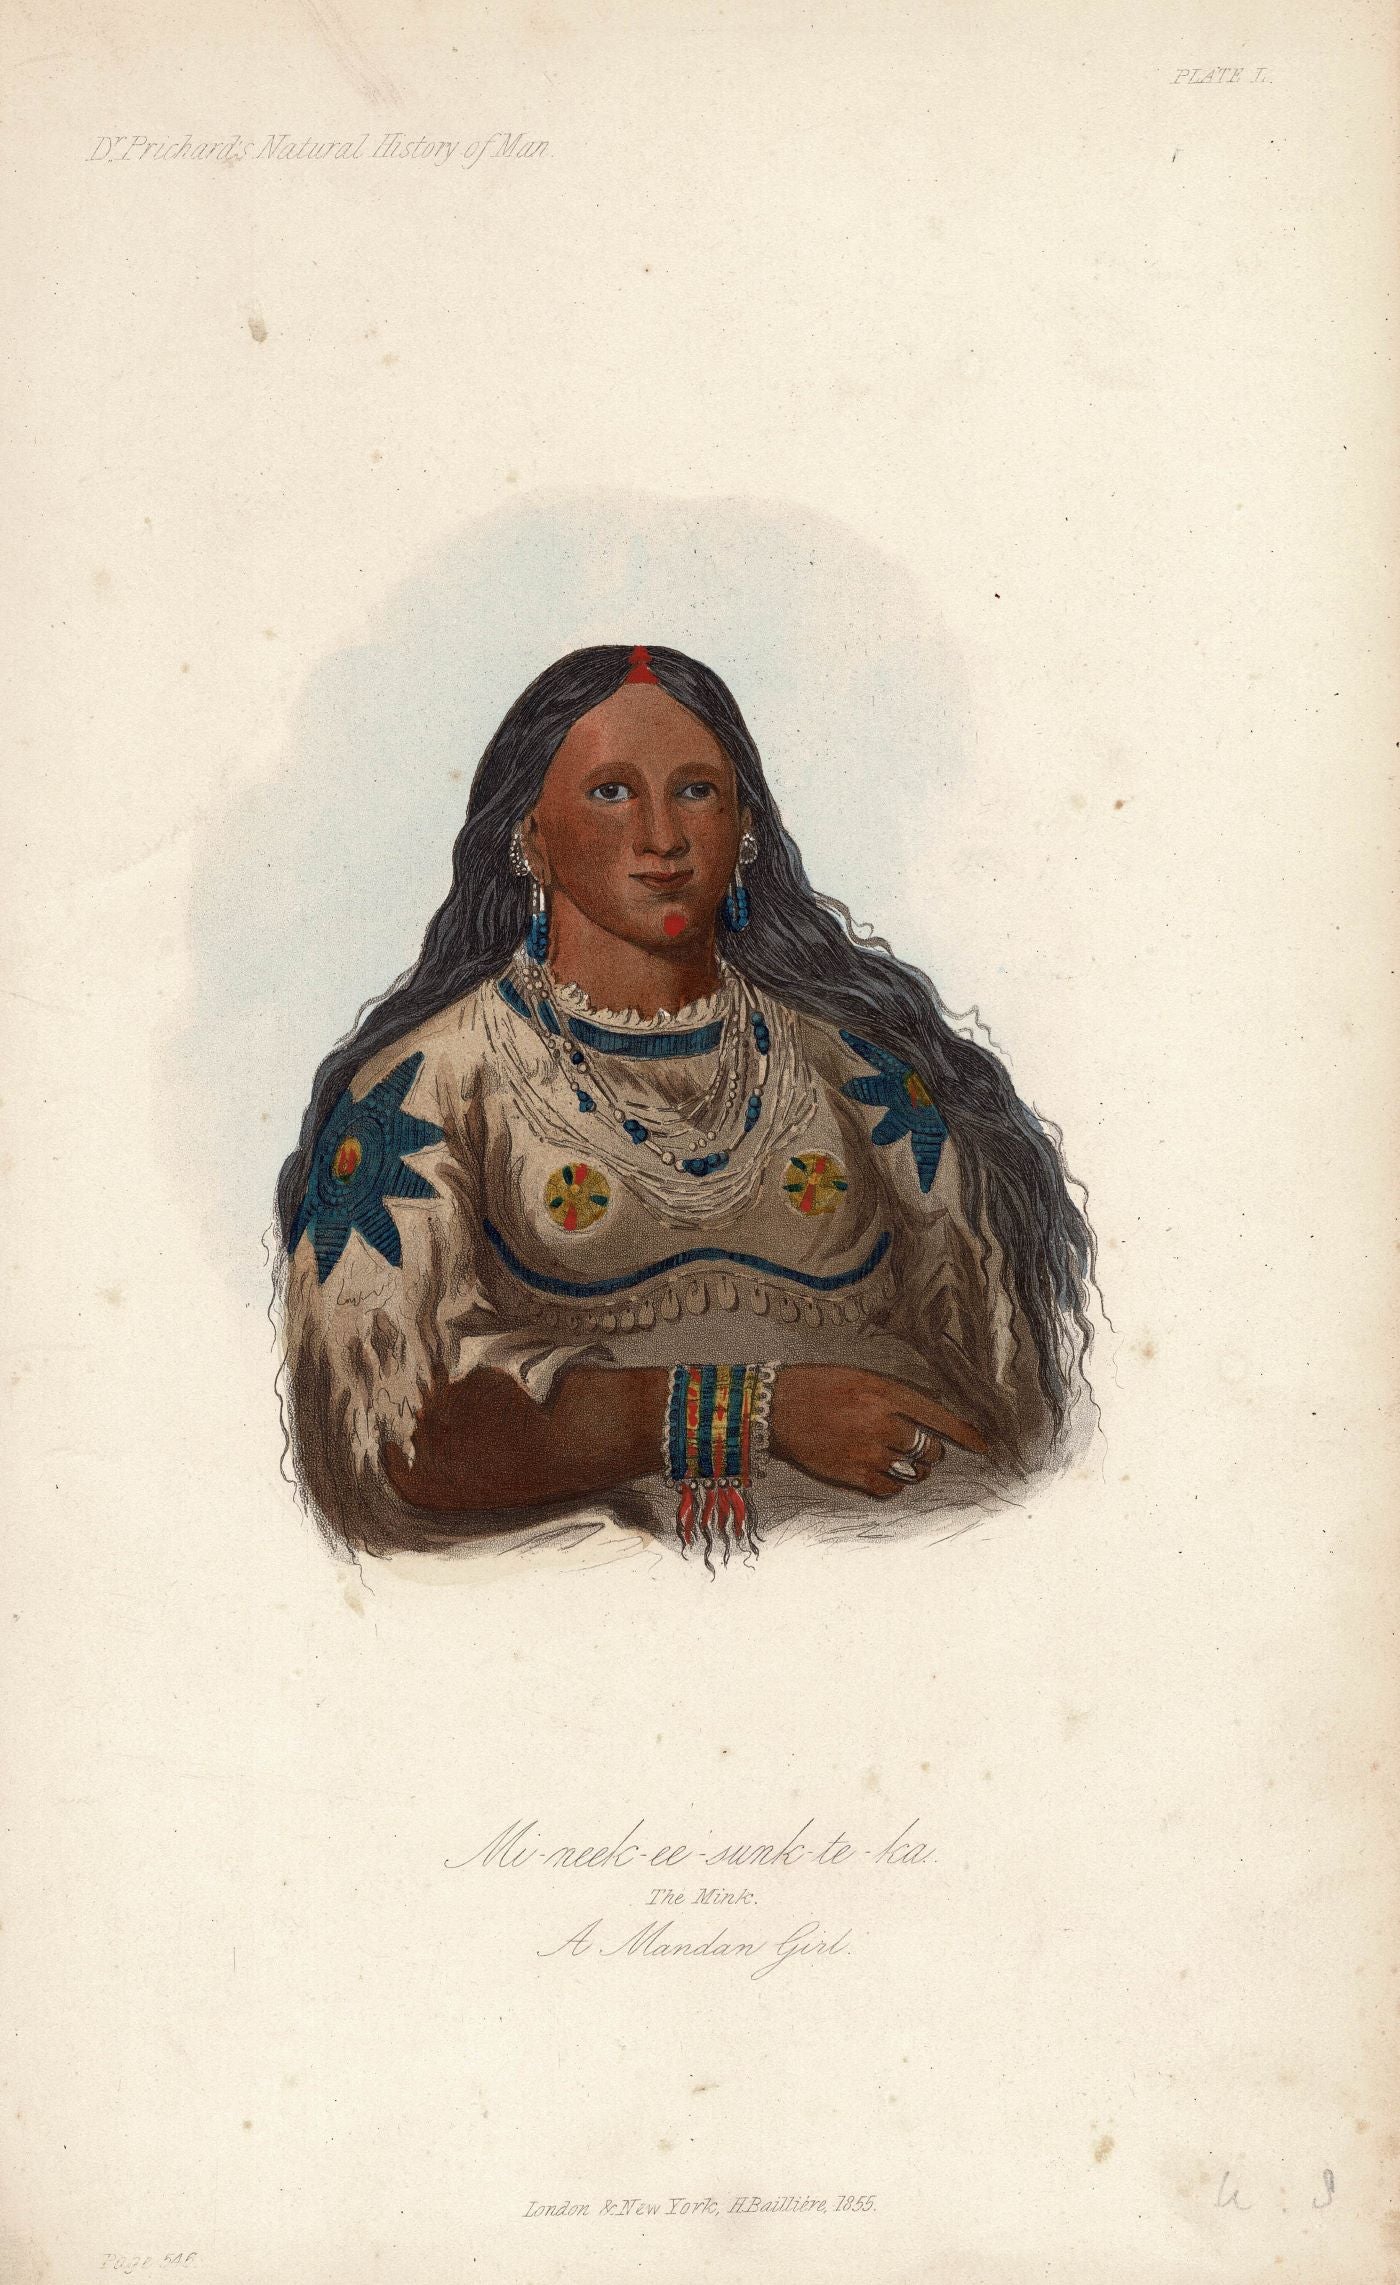 Mink a native American female of the Mandan tribe antique print 1855